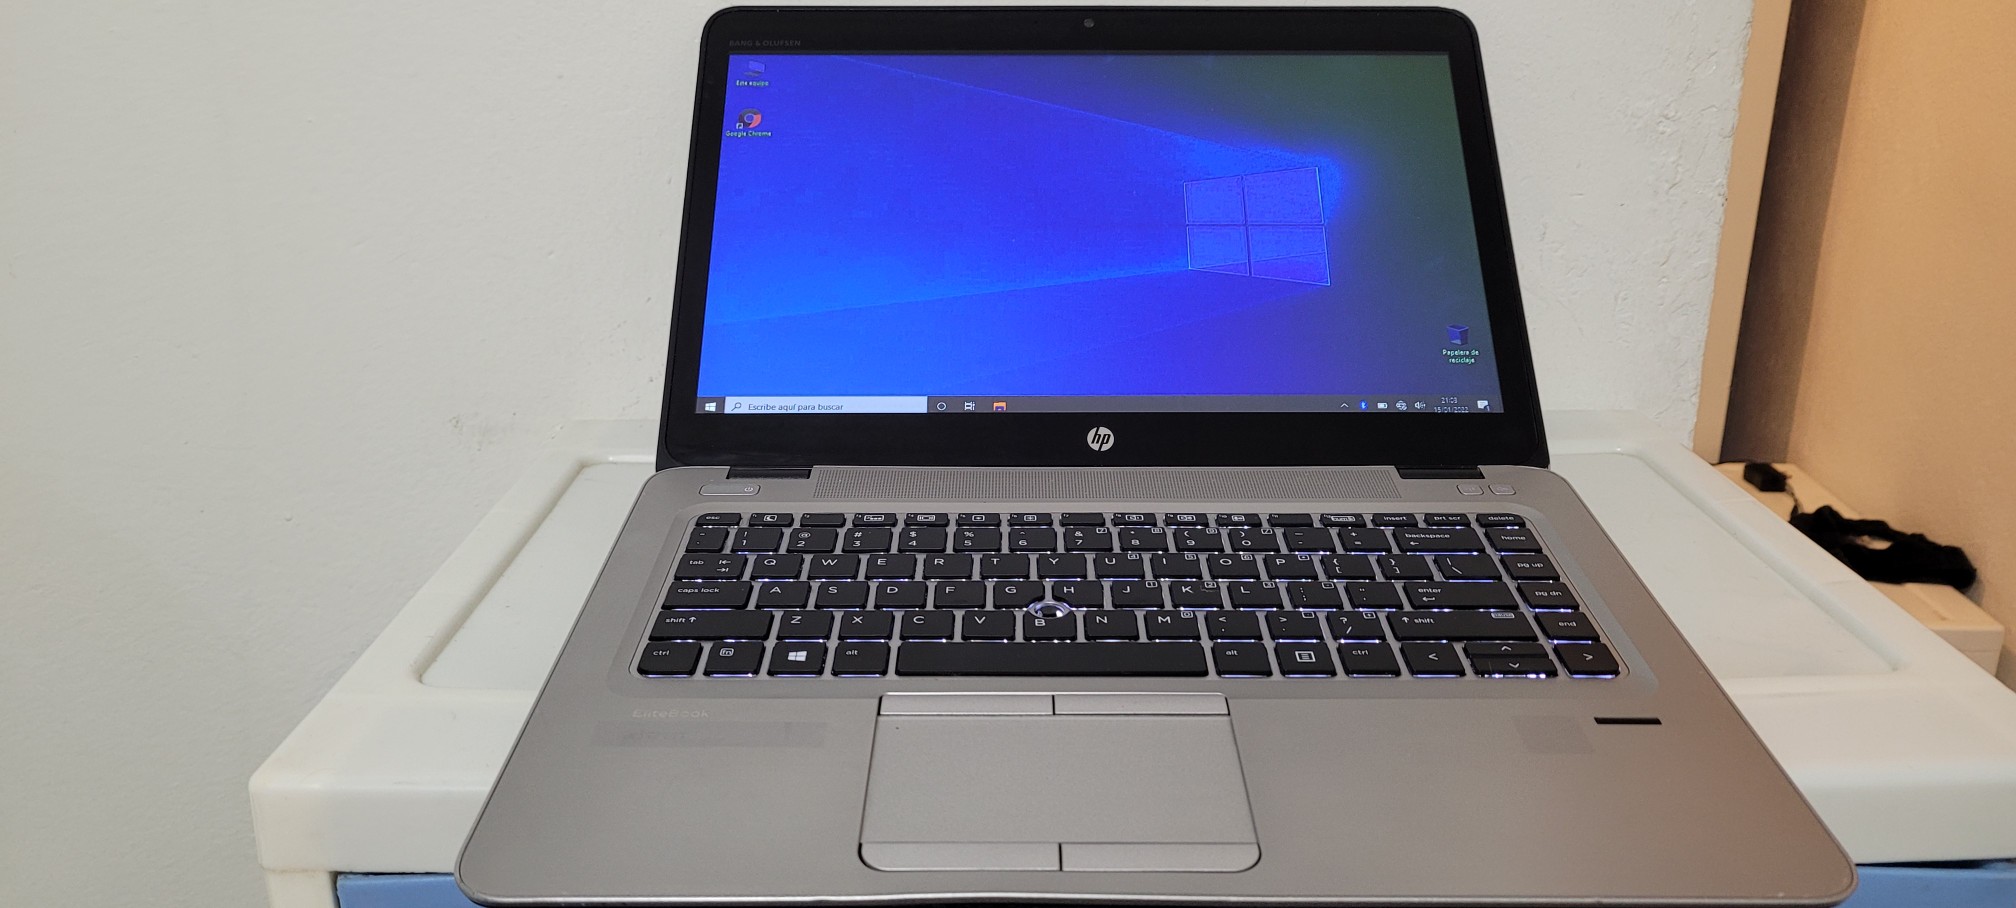 computadoras y laptops - Laptop hp Slim G2 14 Pulg Core i5 6ta Ram 8gb ddr4 Disco 500gb SSD 1080p